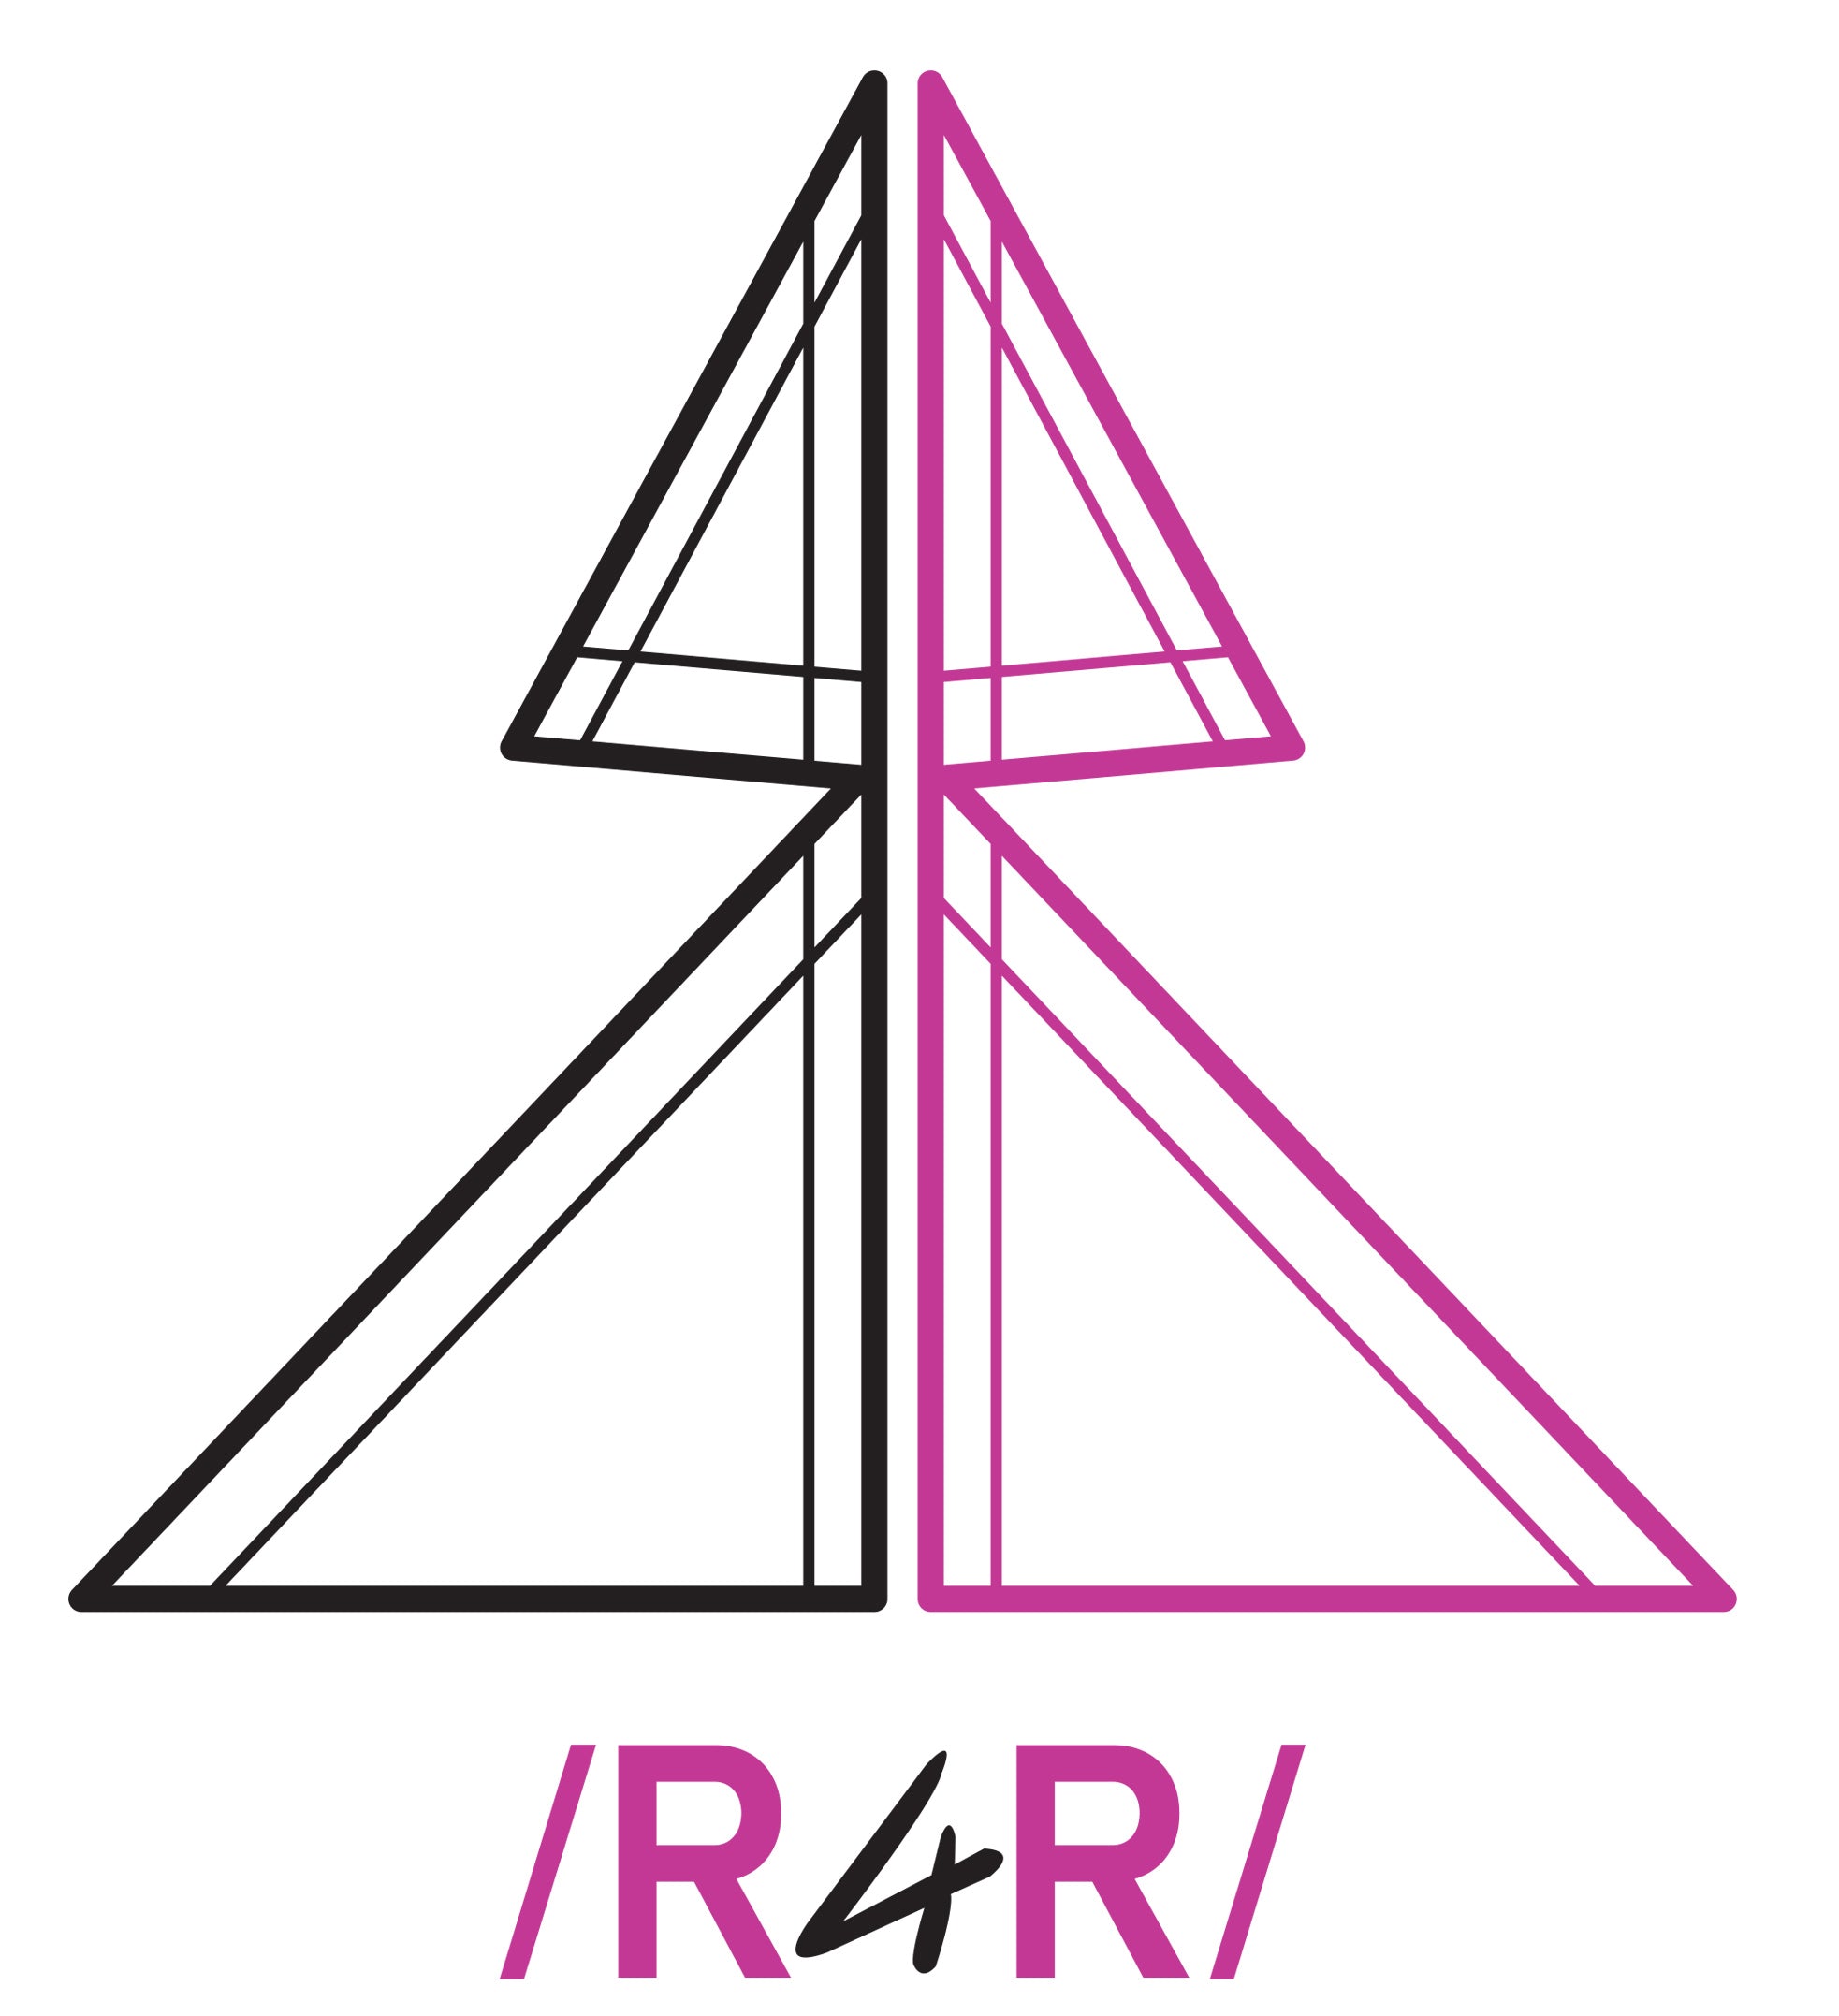 R4R - Redaelli's Family Project